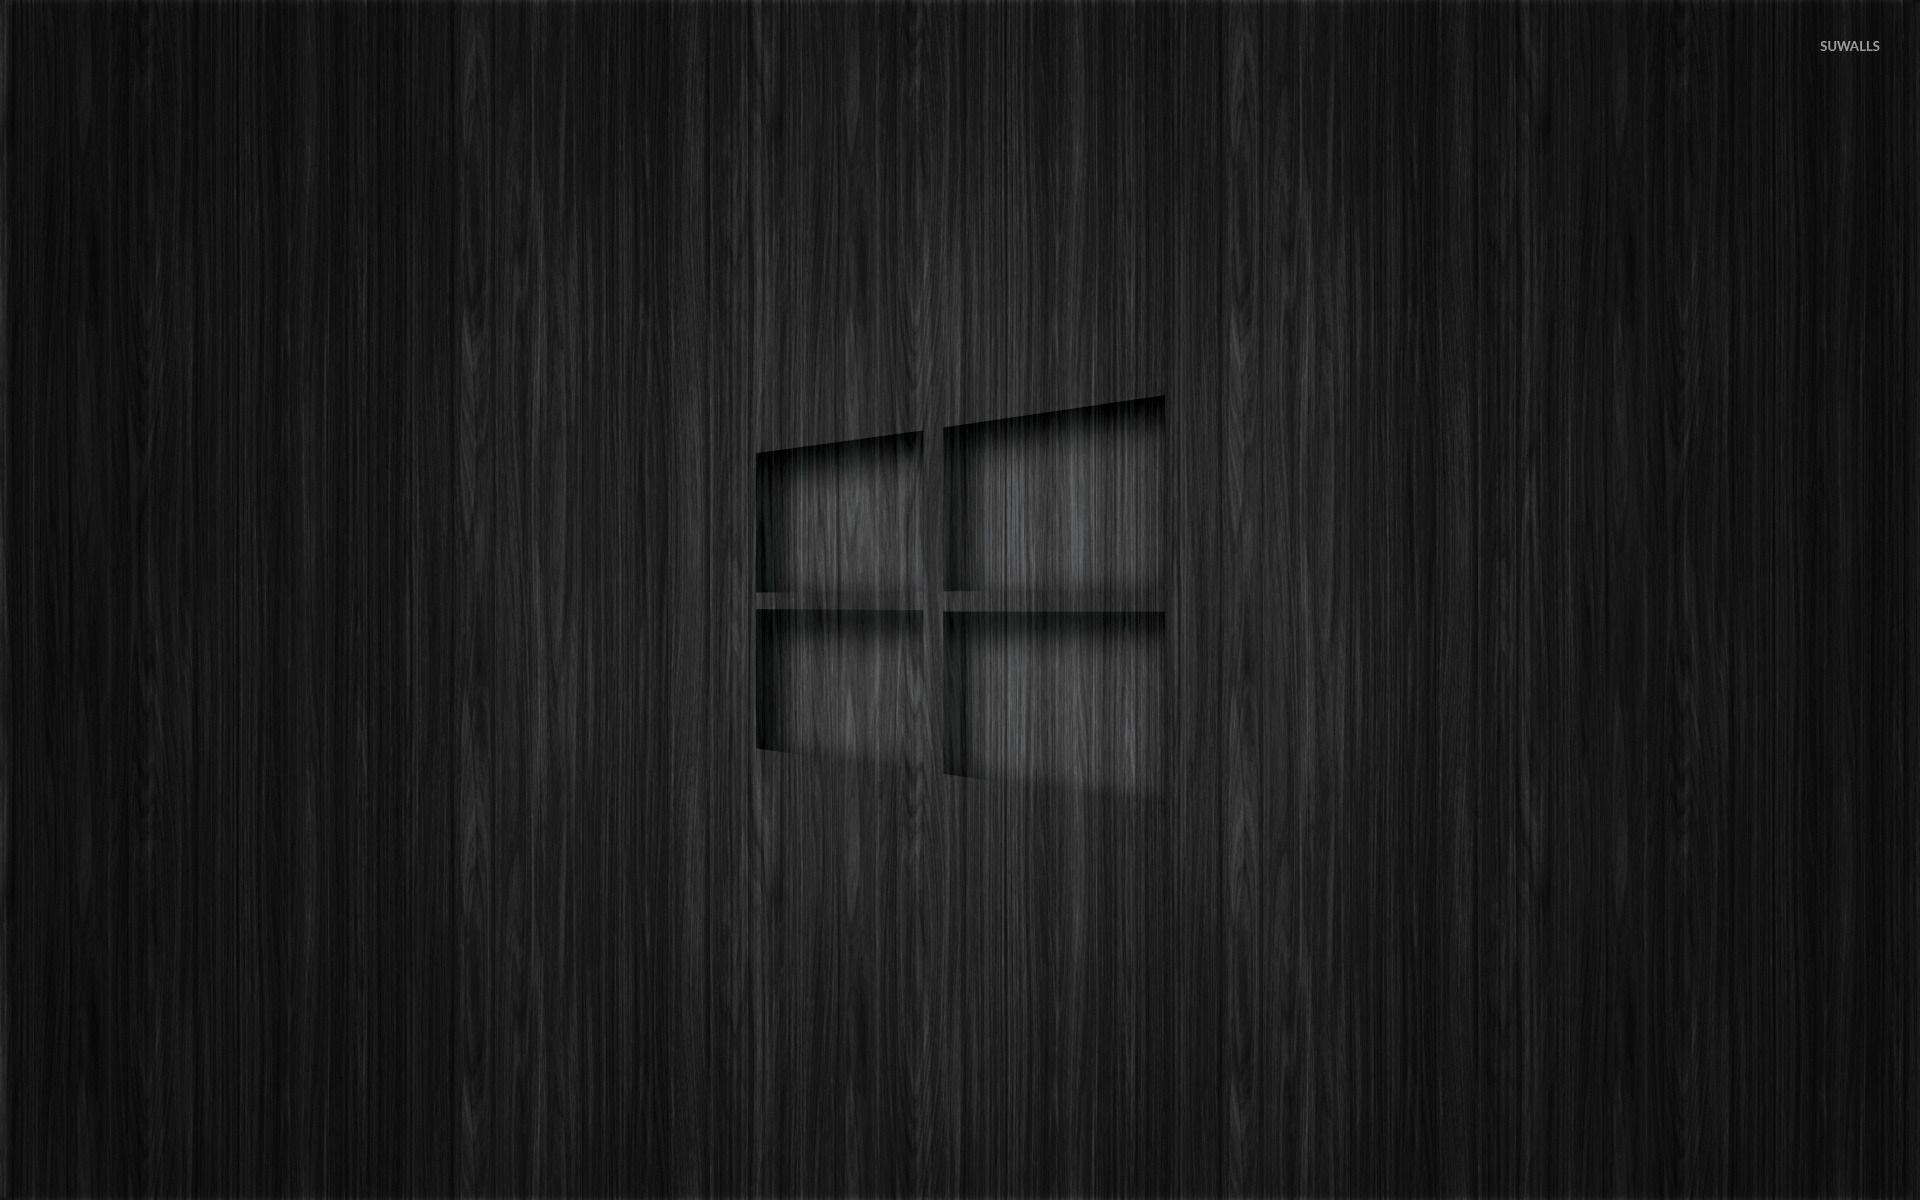 Dark Windows Logo - Windows 10 transparent logo on dark wood wallpaper - Computer ...